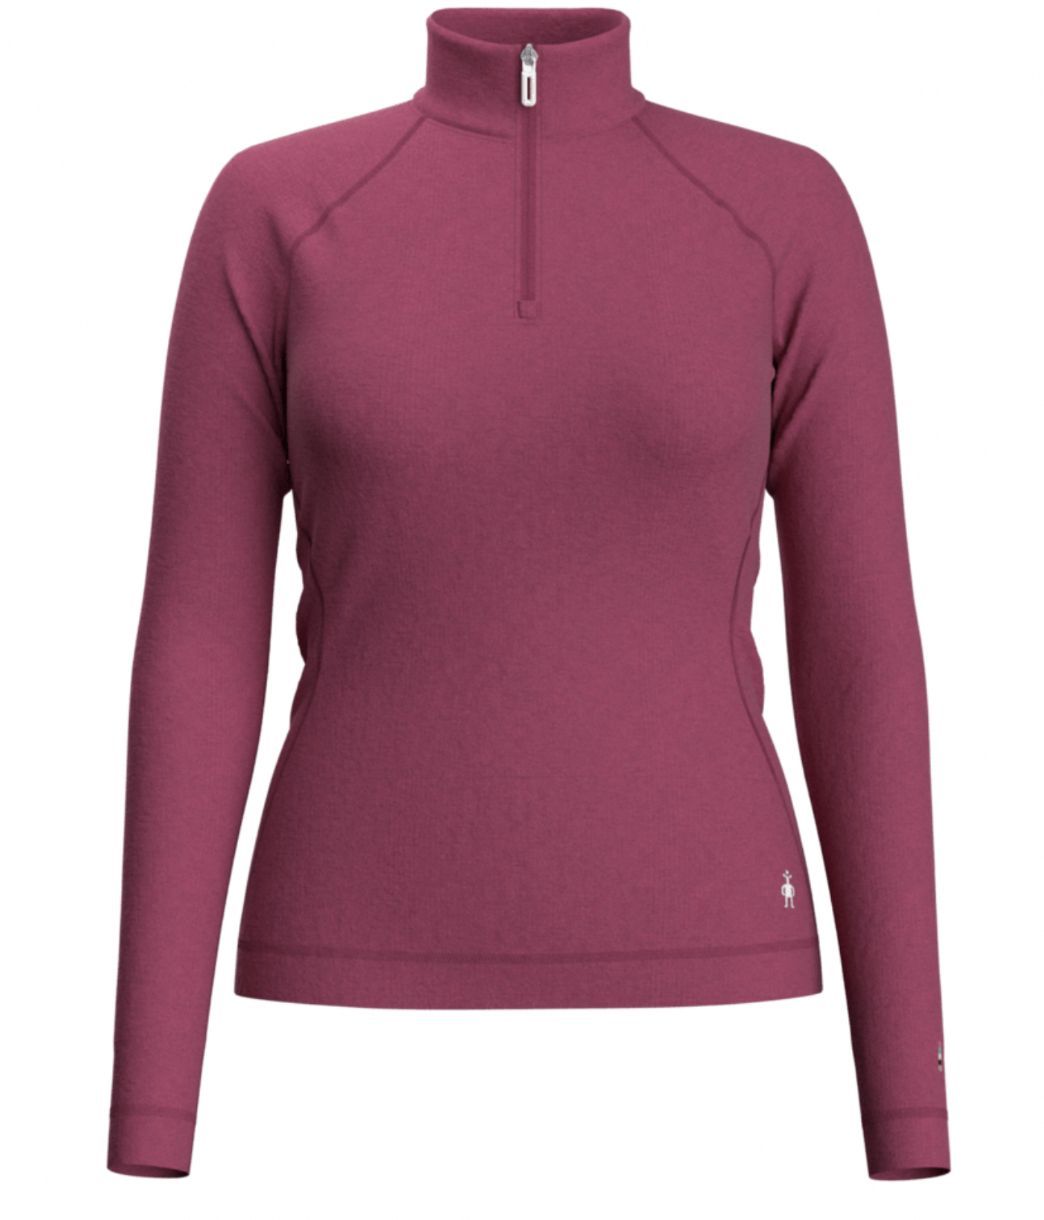 Women's Smartwool Thermal 1/4 ZIP sweater